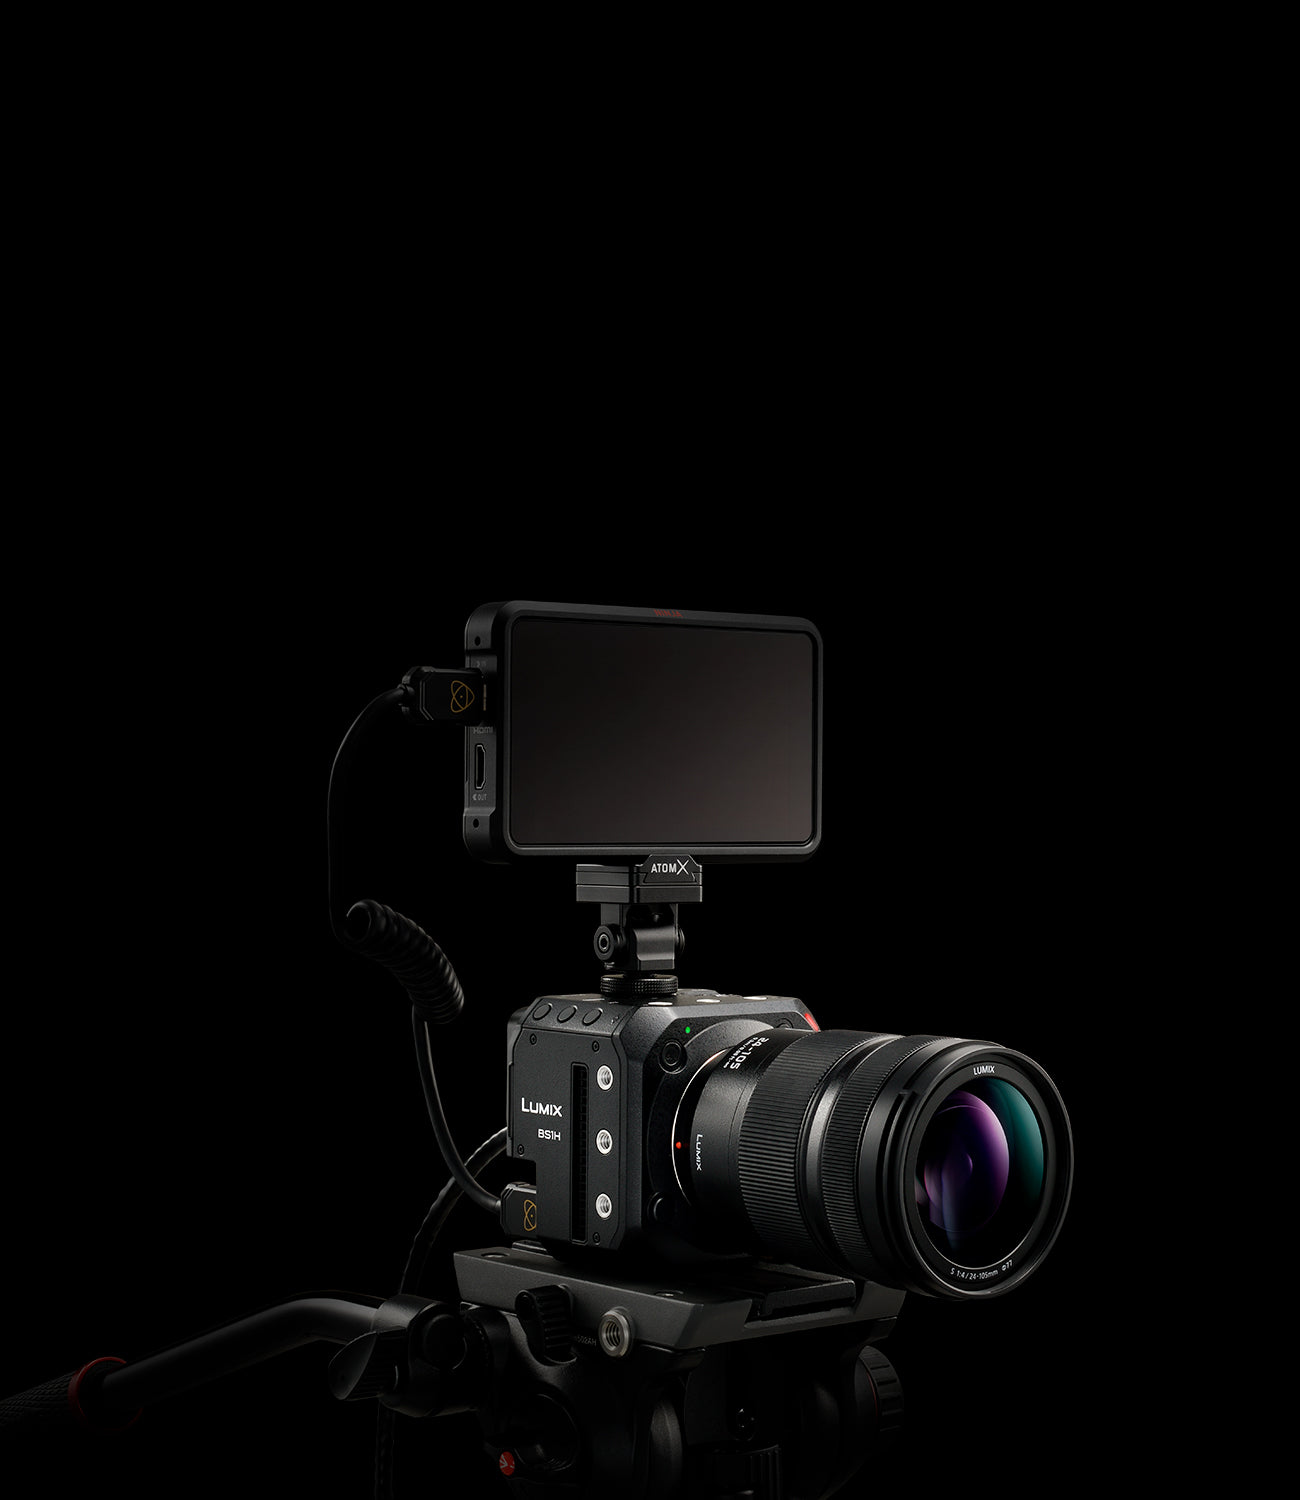 Panasonic LUMIX Box Camera with 24.2MP Full-Frame MOS Sensor - DC 